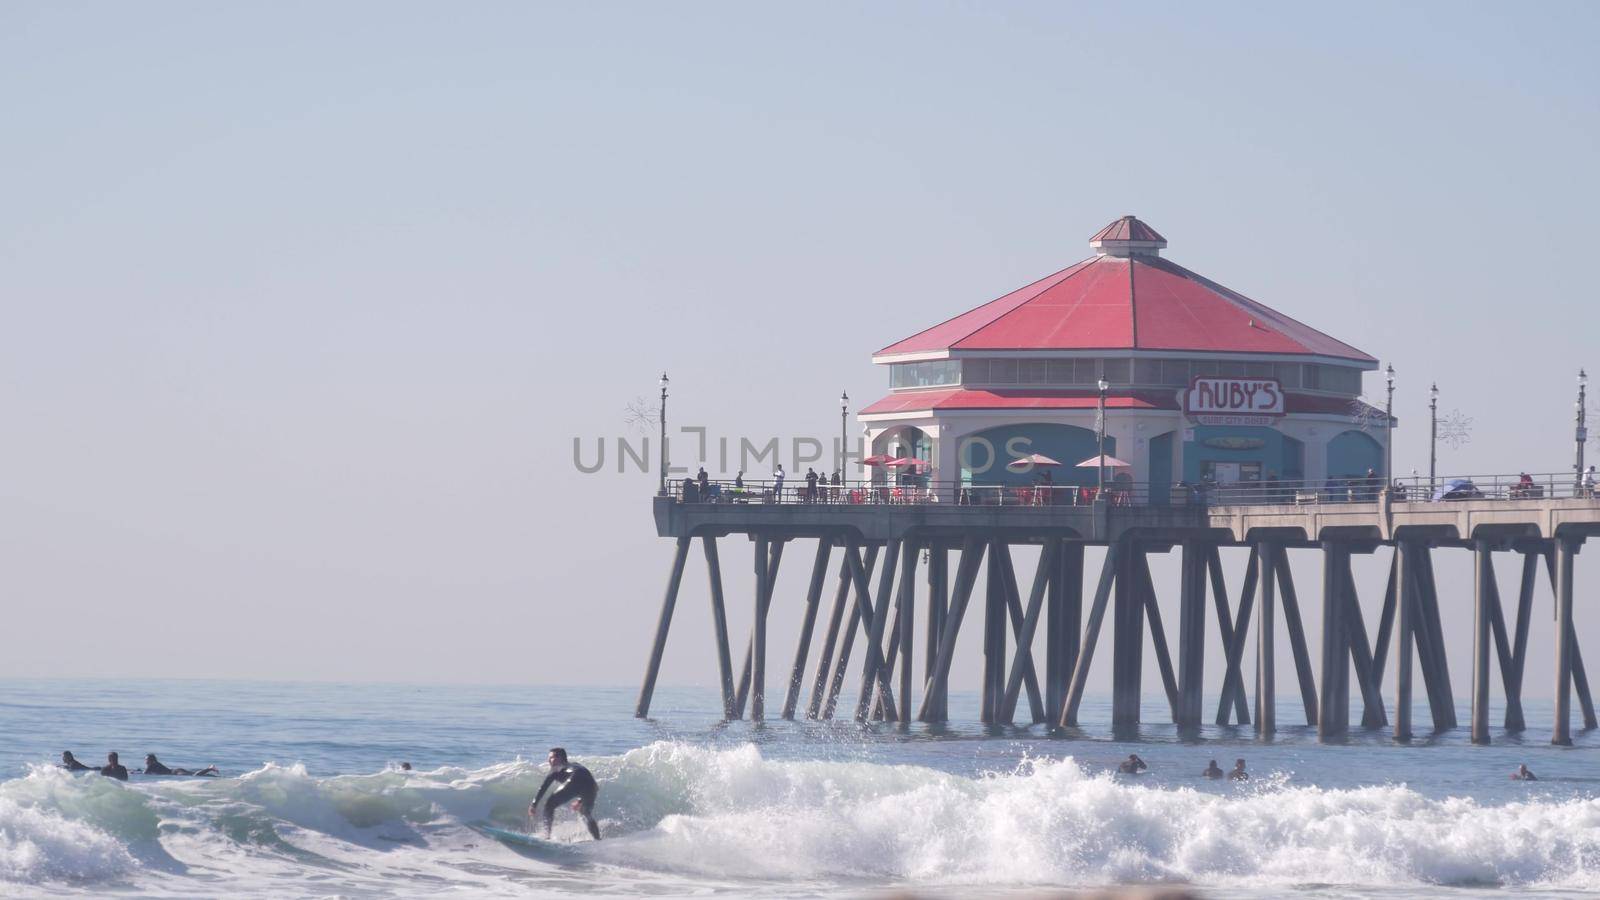 Huntington Beach, California USA - 2 Dec 2020: People surfing in ocean waves, pier on coast. Rubys diner on beachfront boardwalk. Surfers in water, vacations on beach near Los Angeles, Orange county.